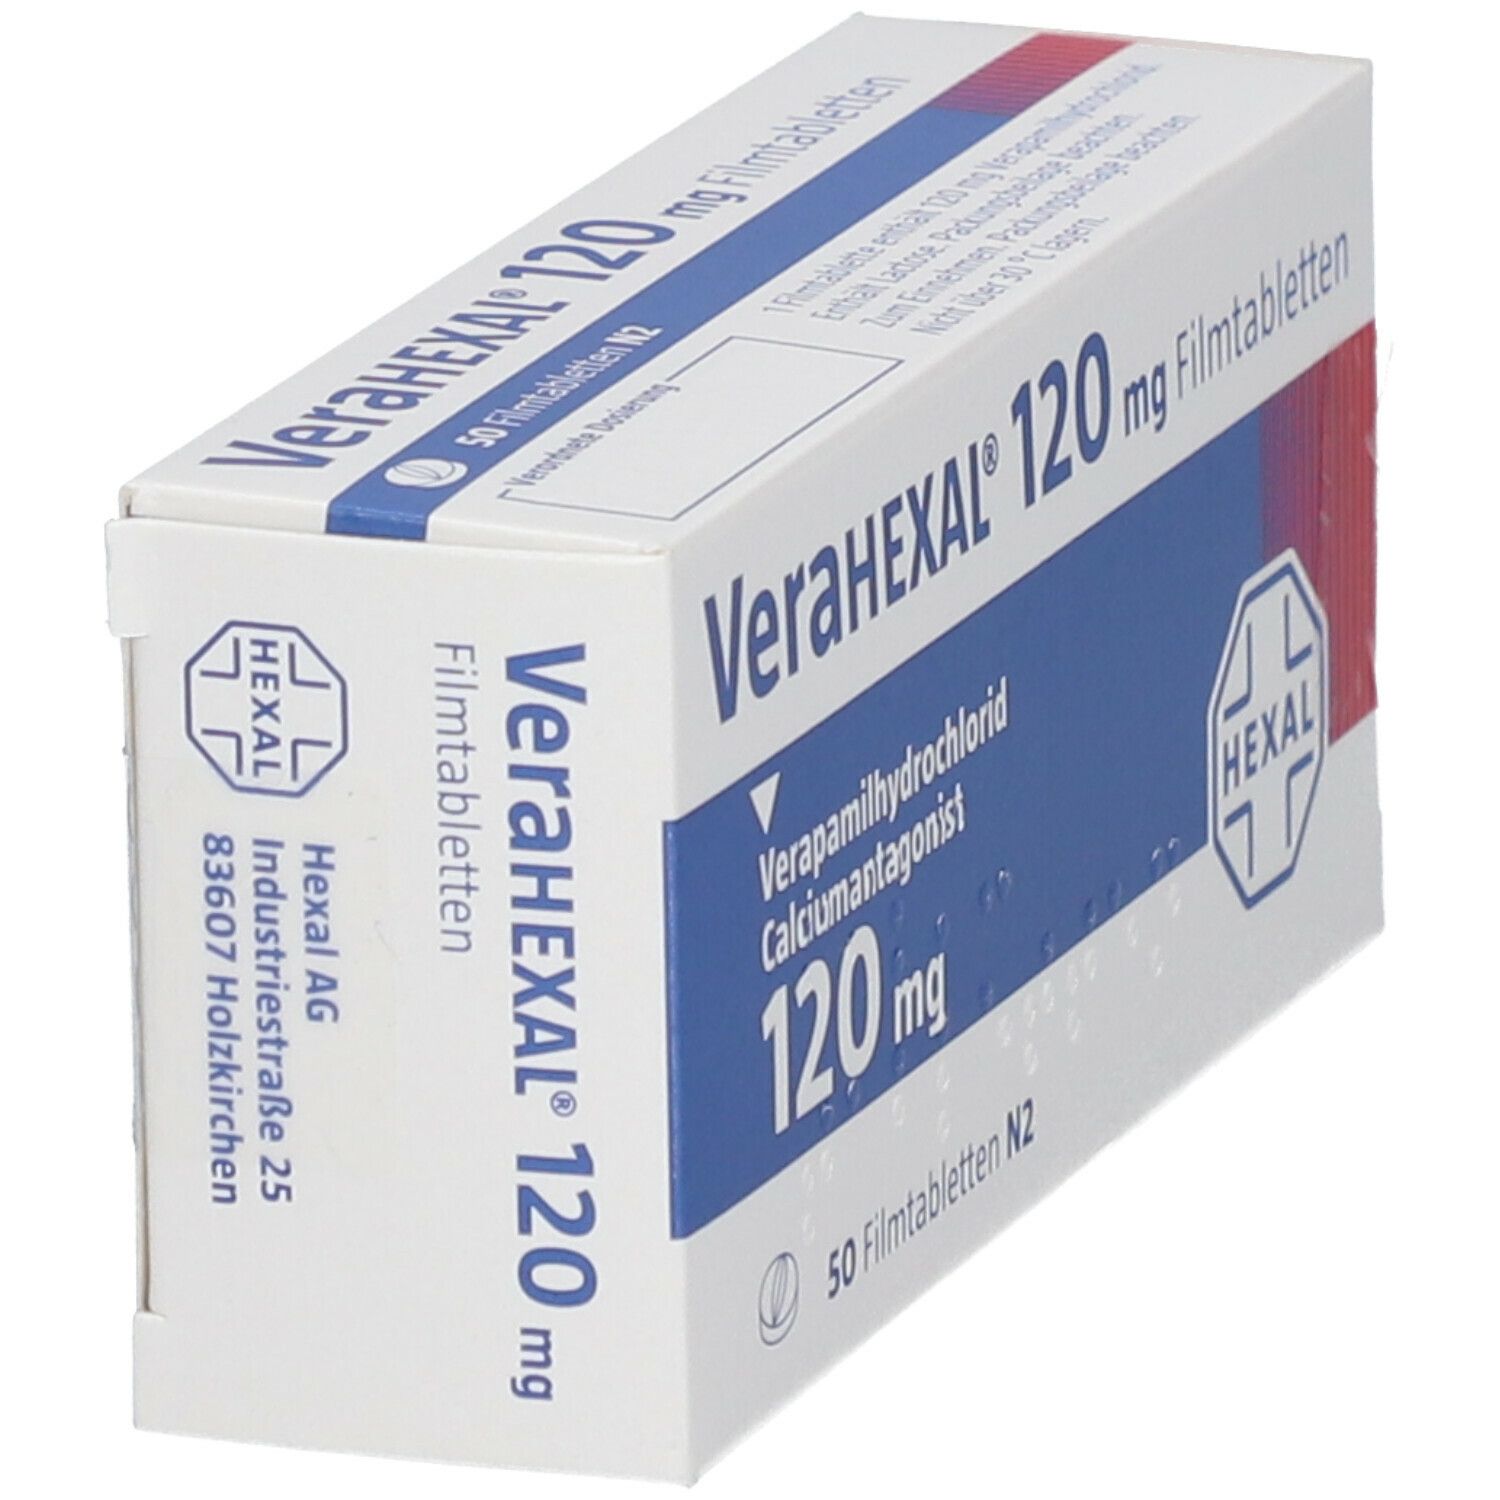 VeraHEXAL® 120 mg